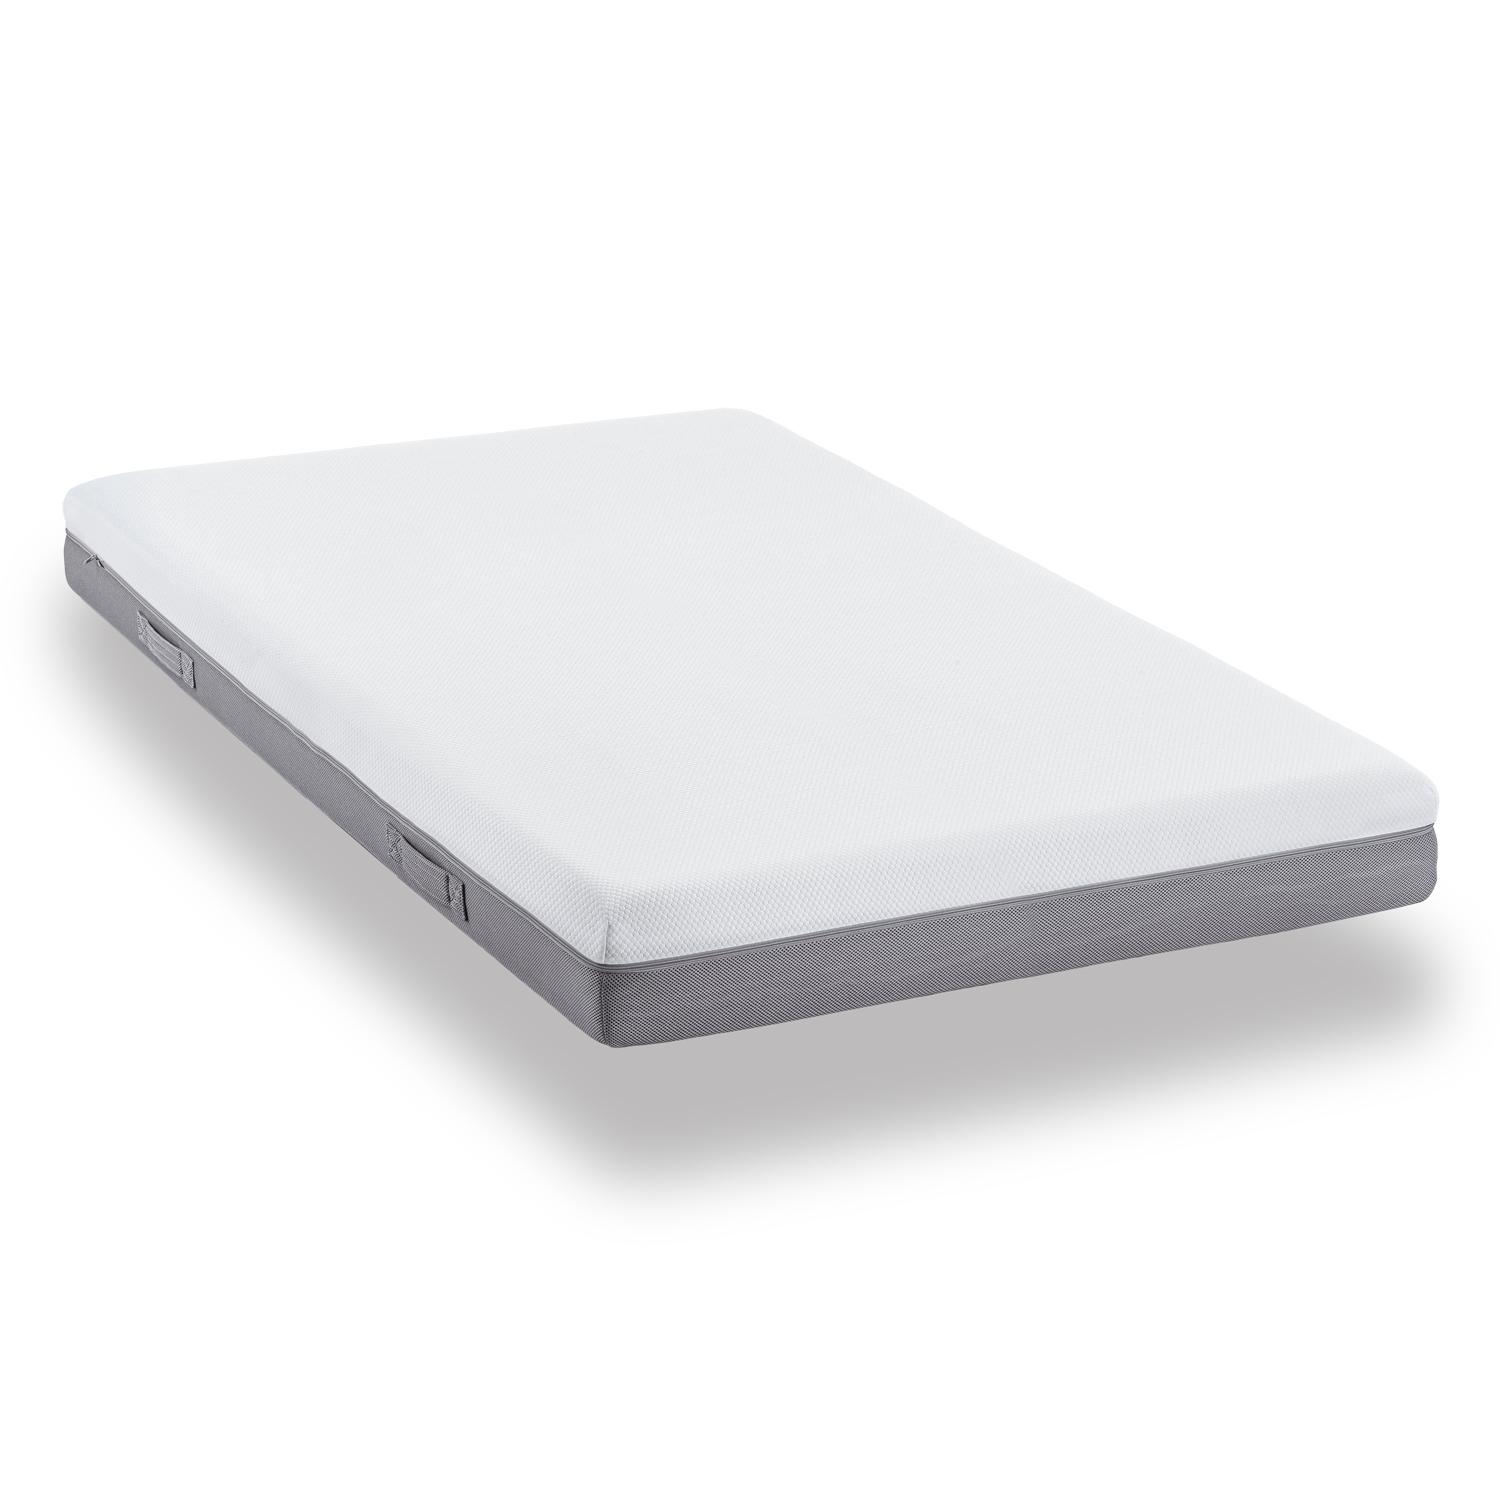 Sleezzz Premium viscoelastic mattress 160 x 200 cm, height 20 cm, firmness level H2/H3, with reversible handles